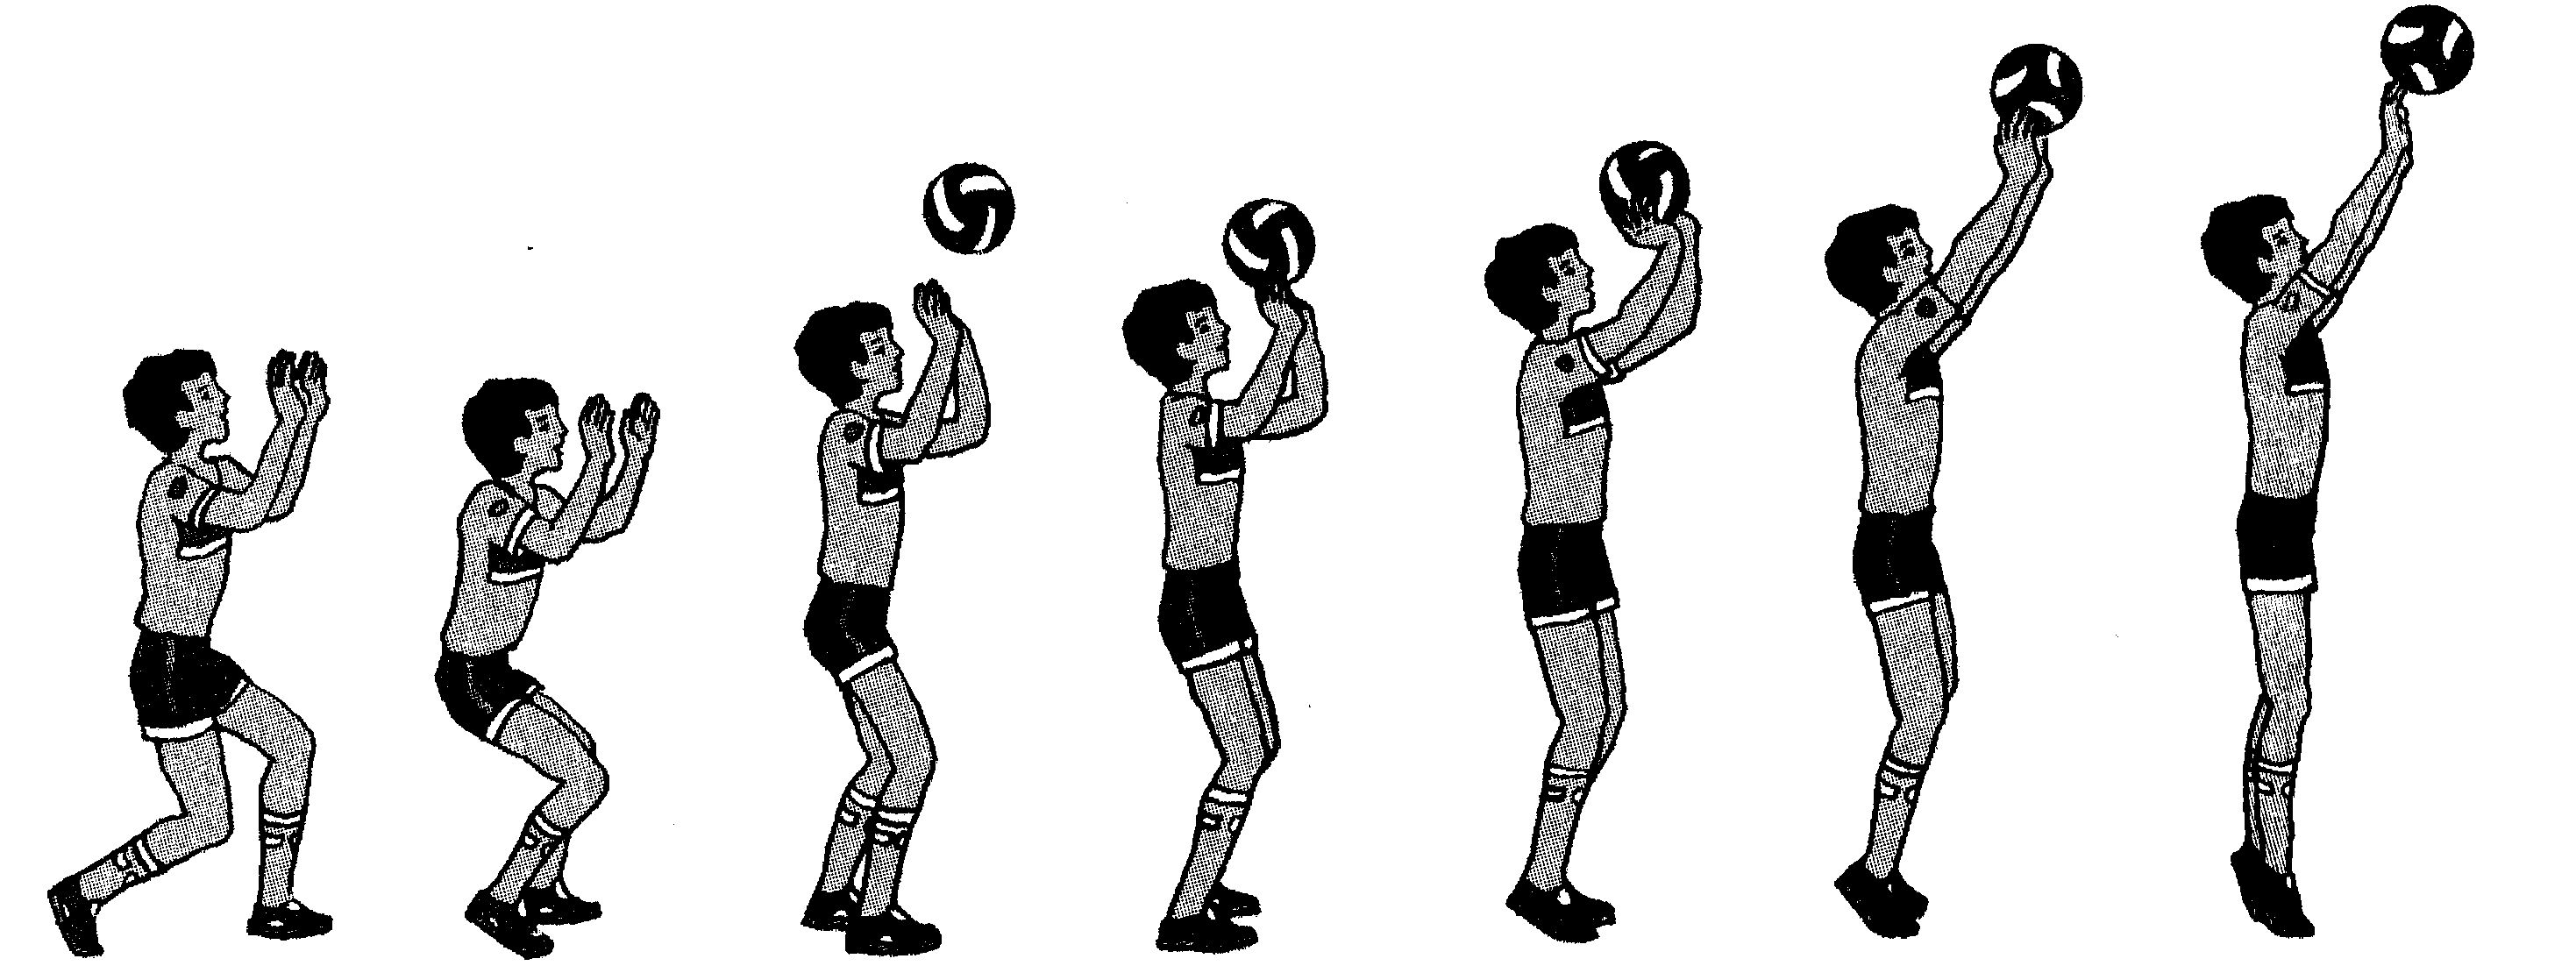 Передача мяча сверху прием снизу. Верхняя передача мяча в волейболе. Верхняя передача мяча двумя руками в волейболе. Техника передач мяча в парах сверху и снизу. Волейбол. Передача мяча сверху двумя руками в волейболе.